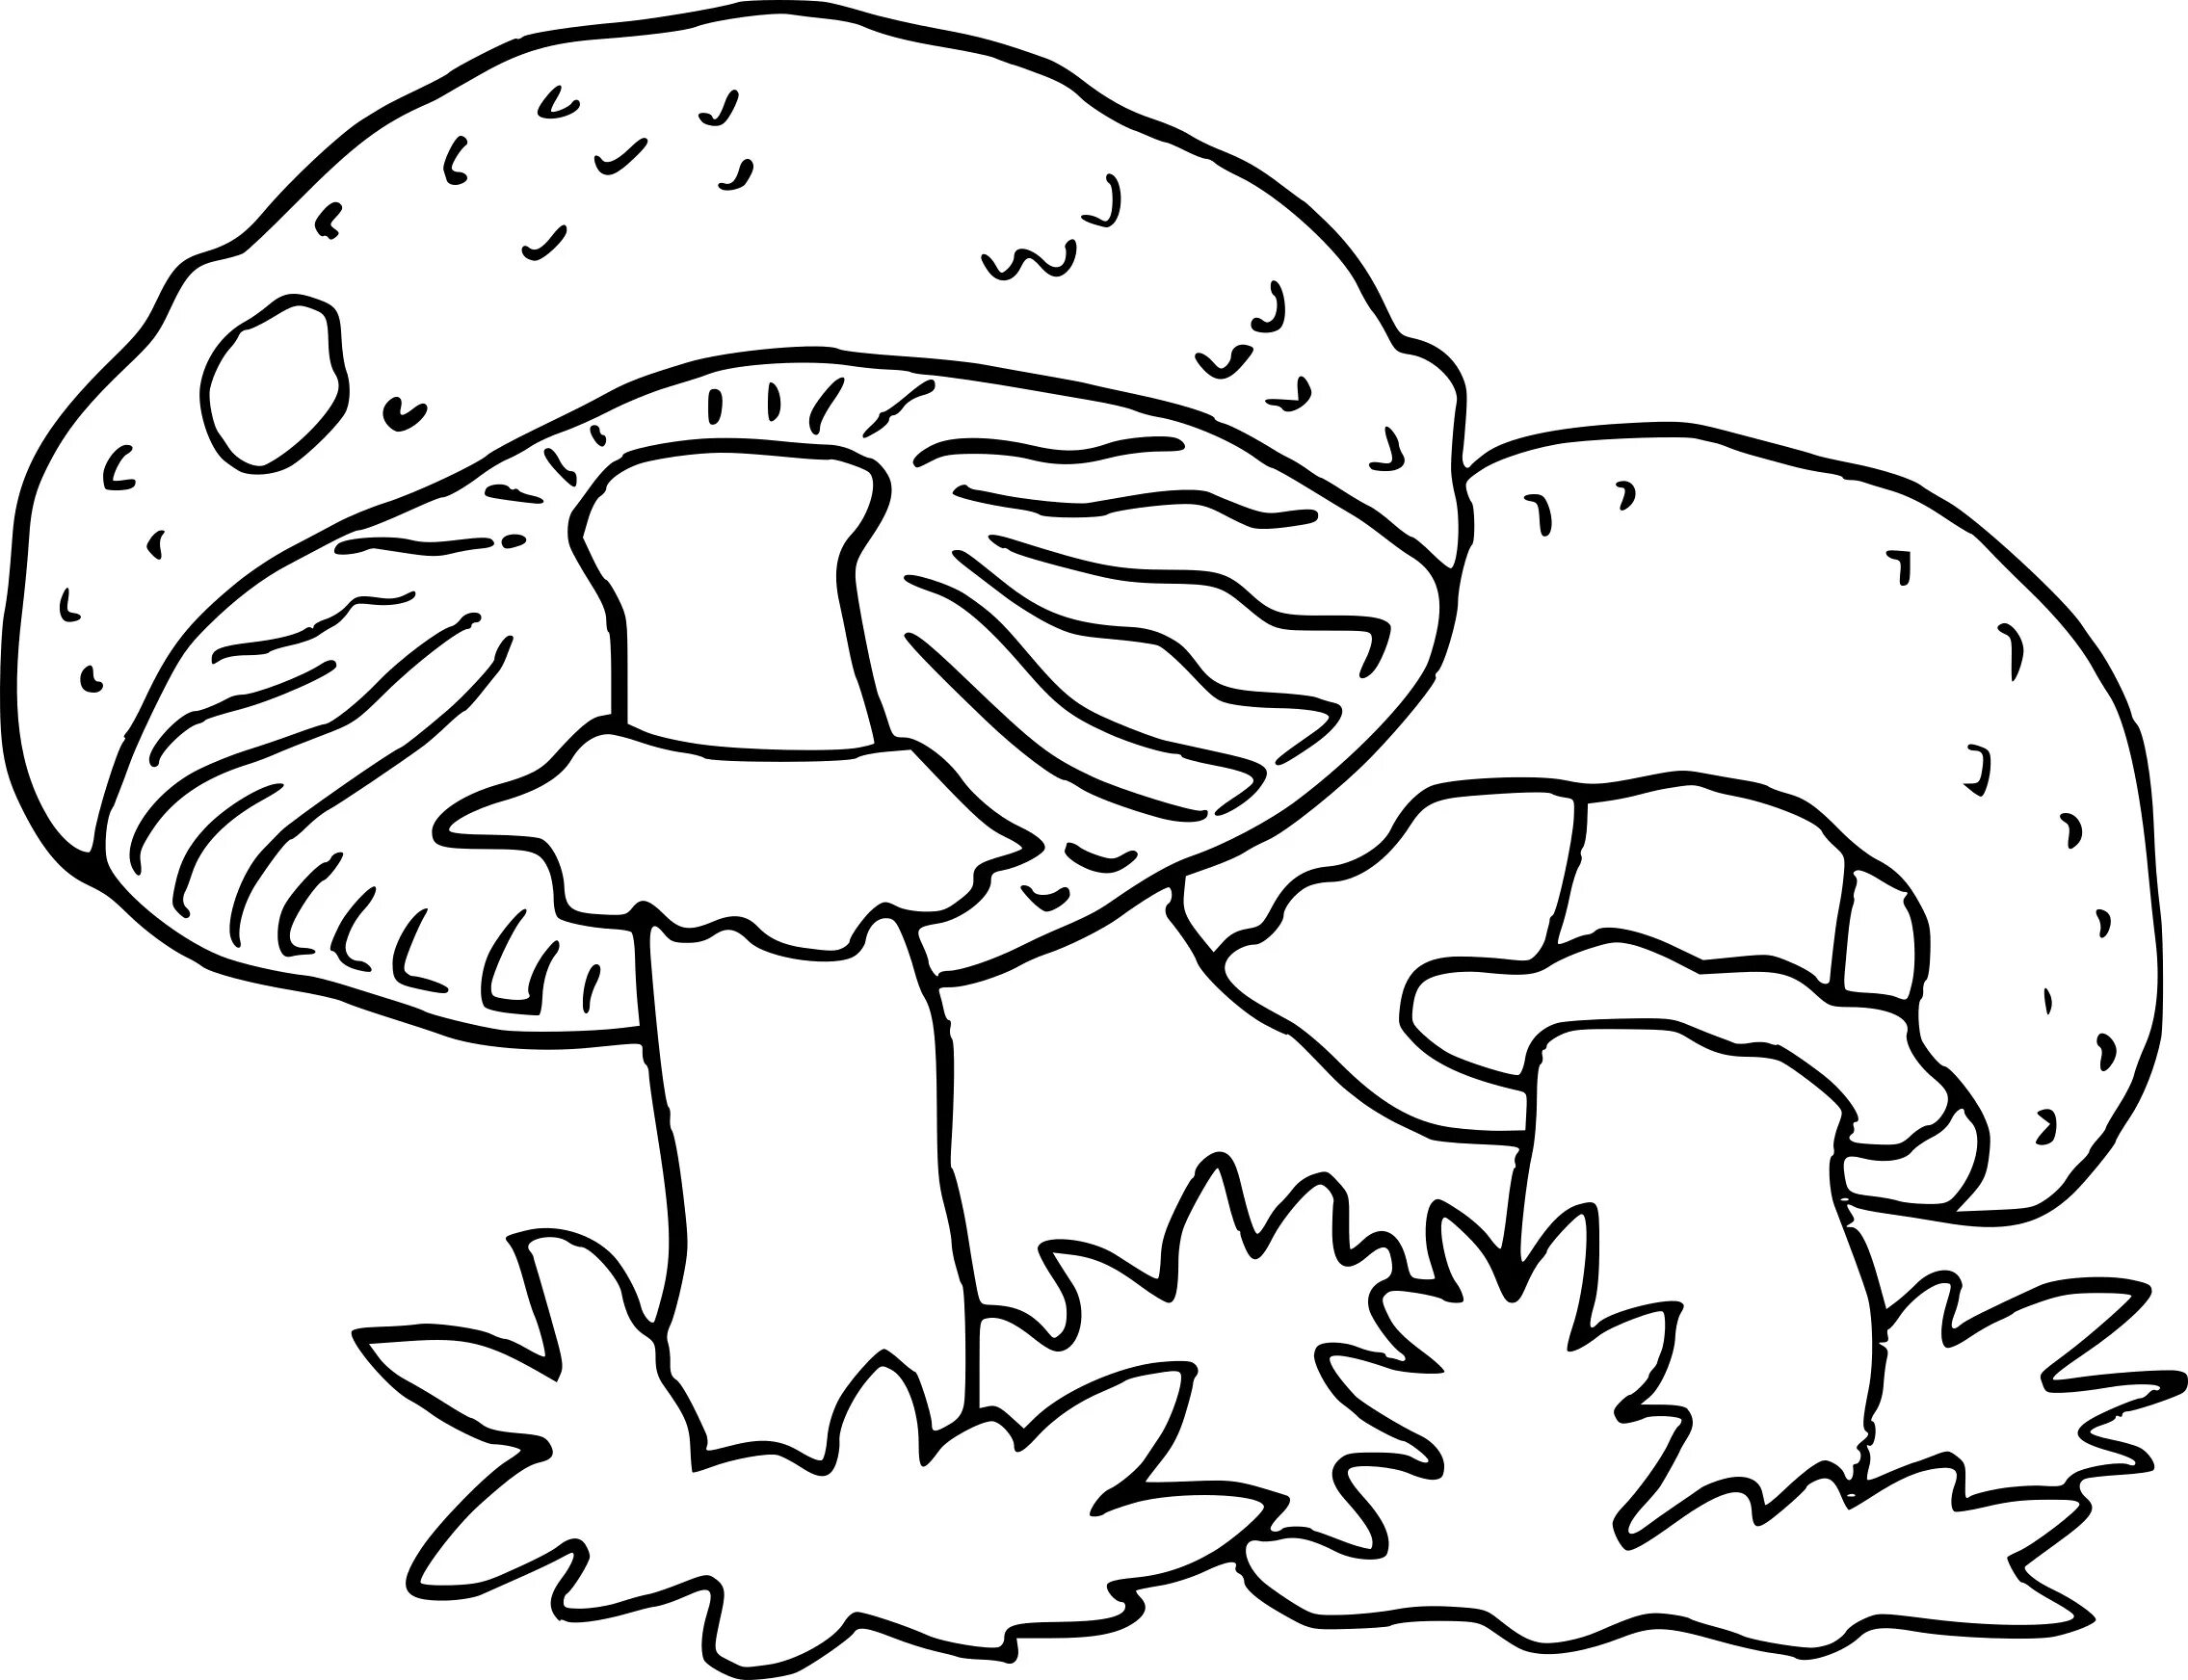 Dazzling edible mushrooms for kids